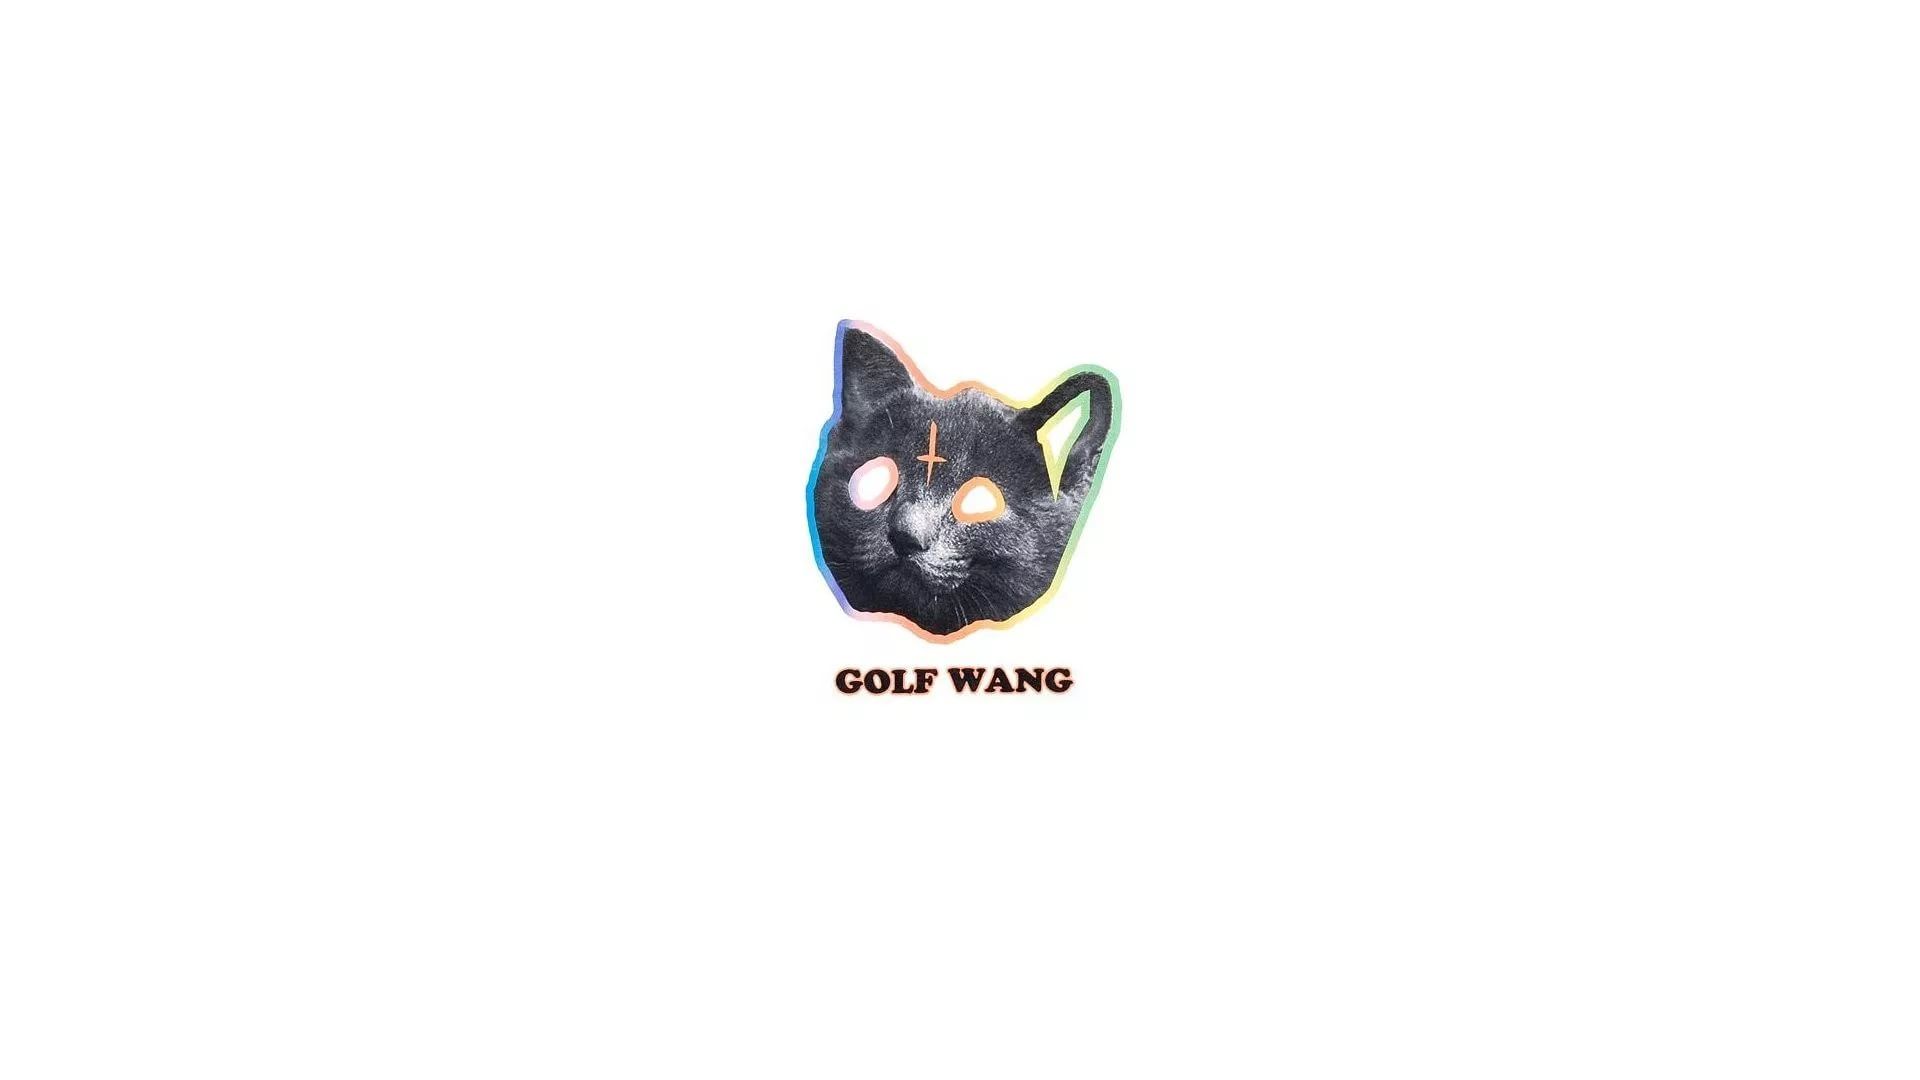 Golf Wang desktop wallpaper download